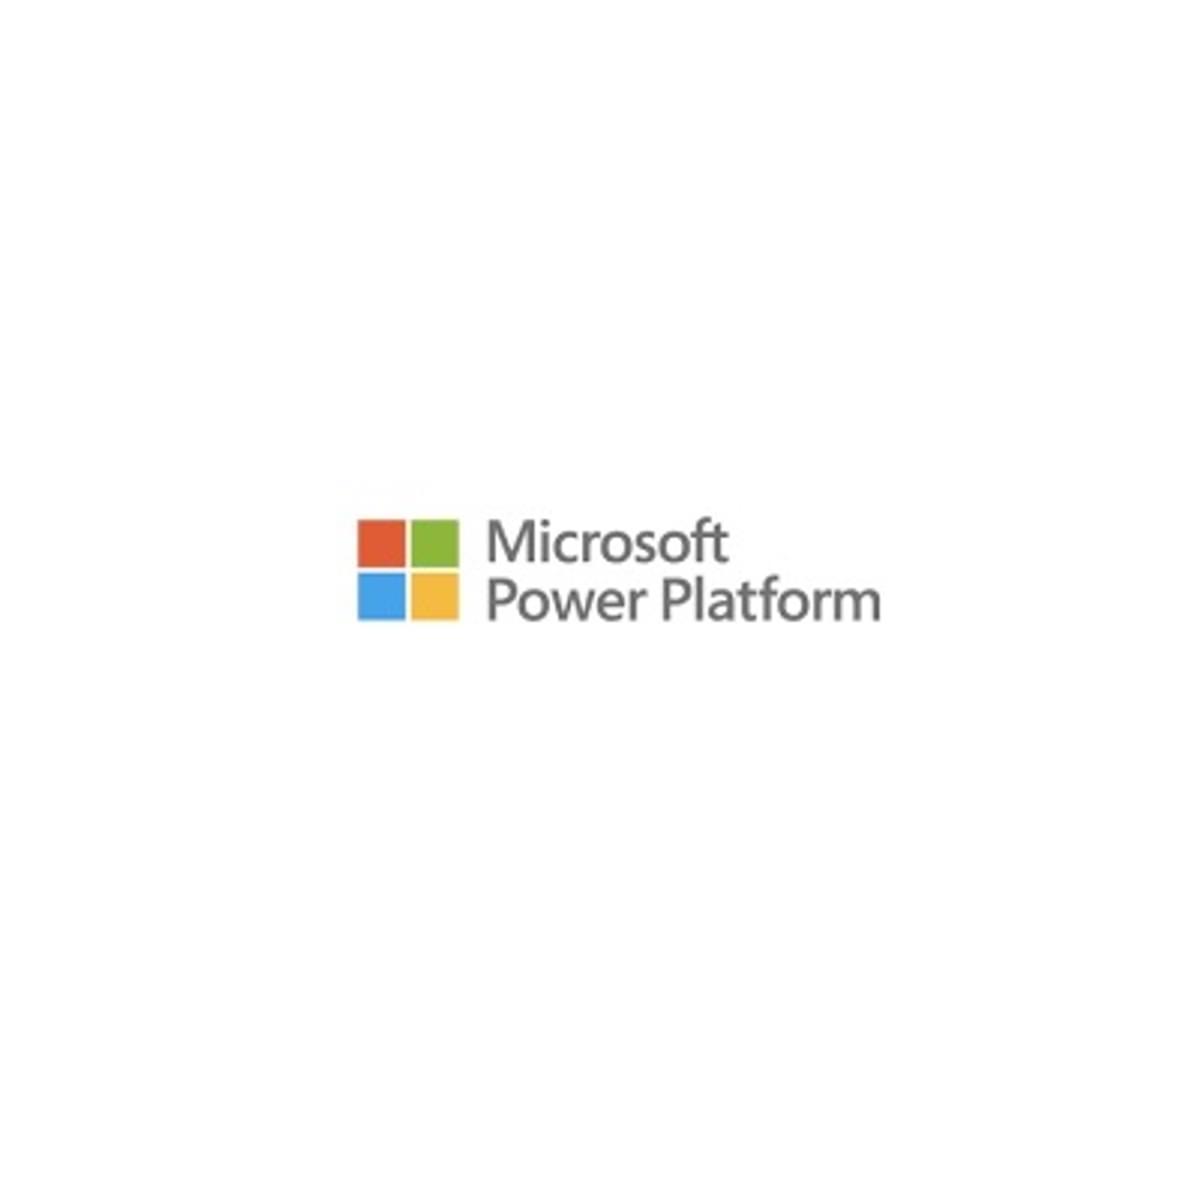 SIG en Macaw introduceren KPI voor Microsoft Power Platform Apps image